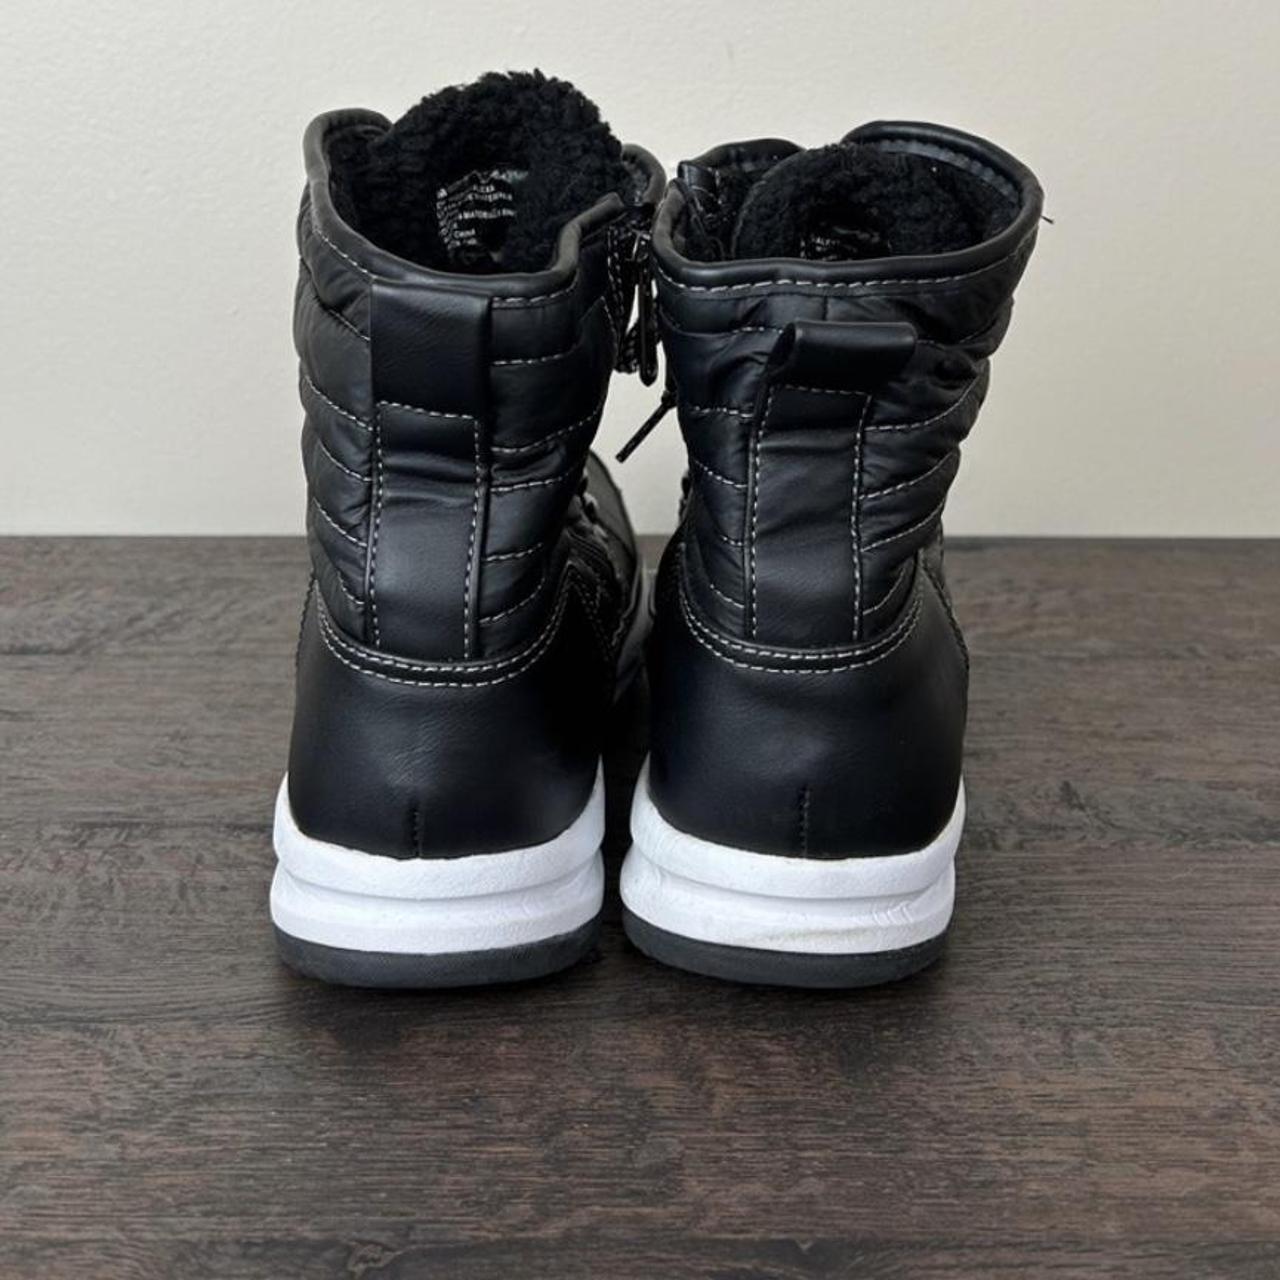 Weatherproof Women's Black and White Boots | Depop